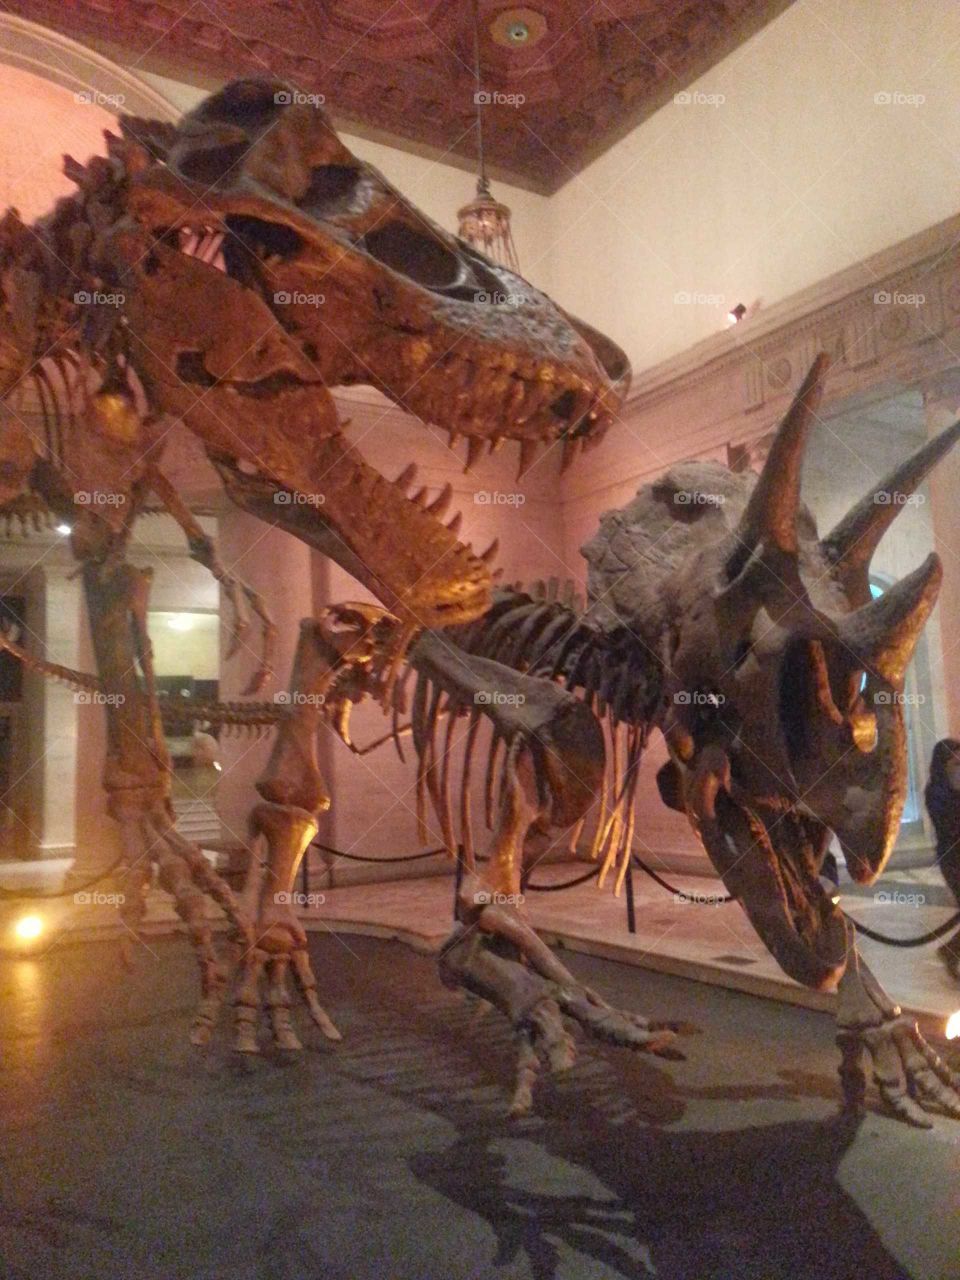 Dinosaur Skeletons - Tyrannosaurus and Triceratops.